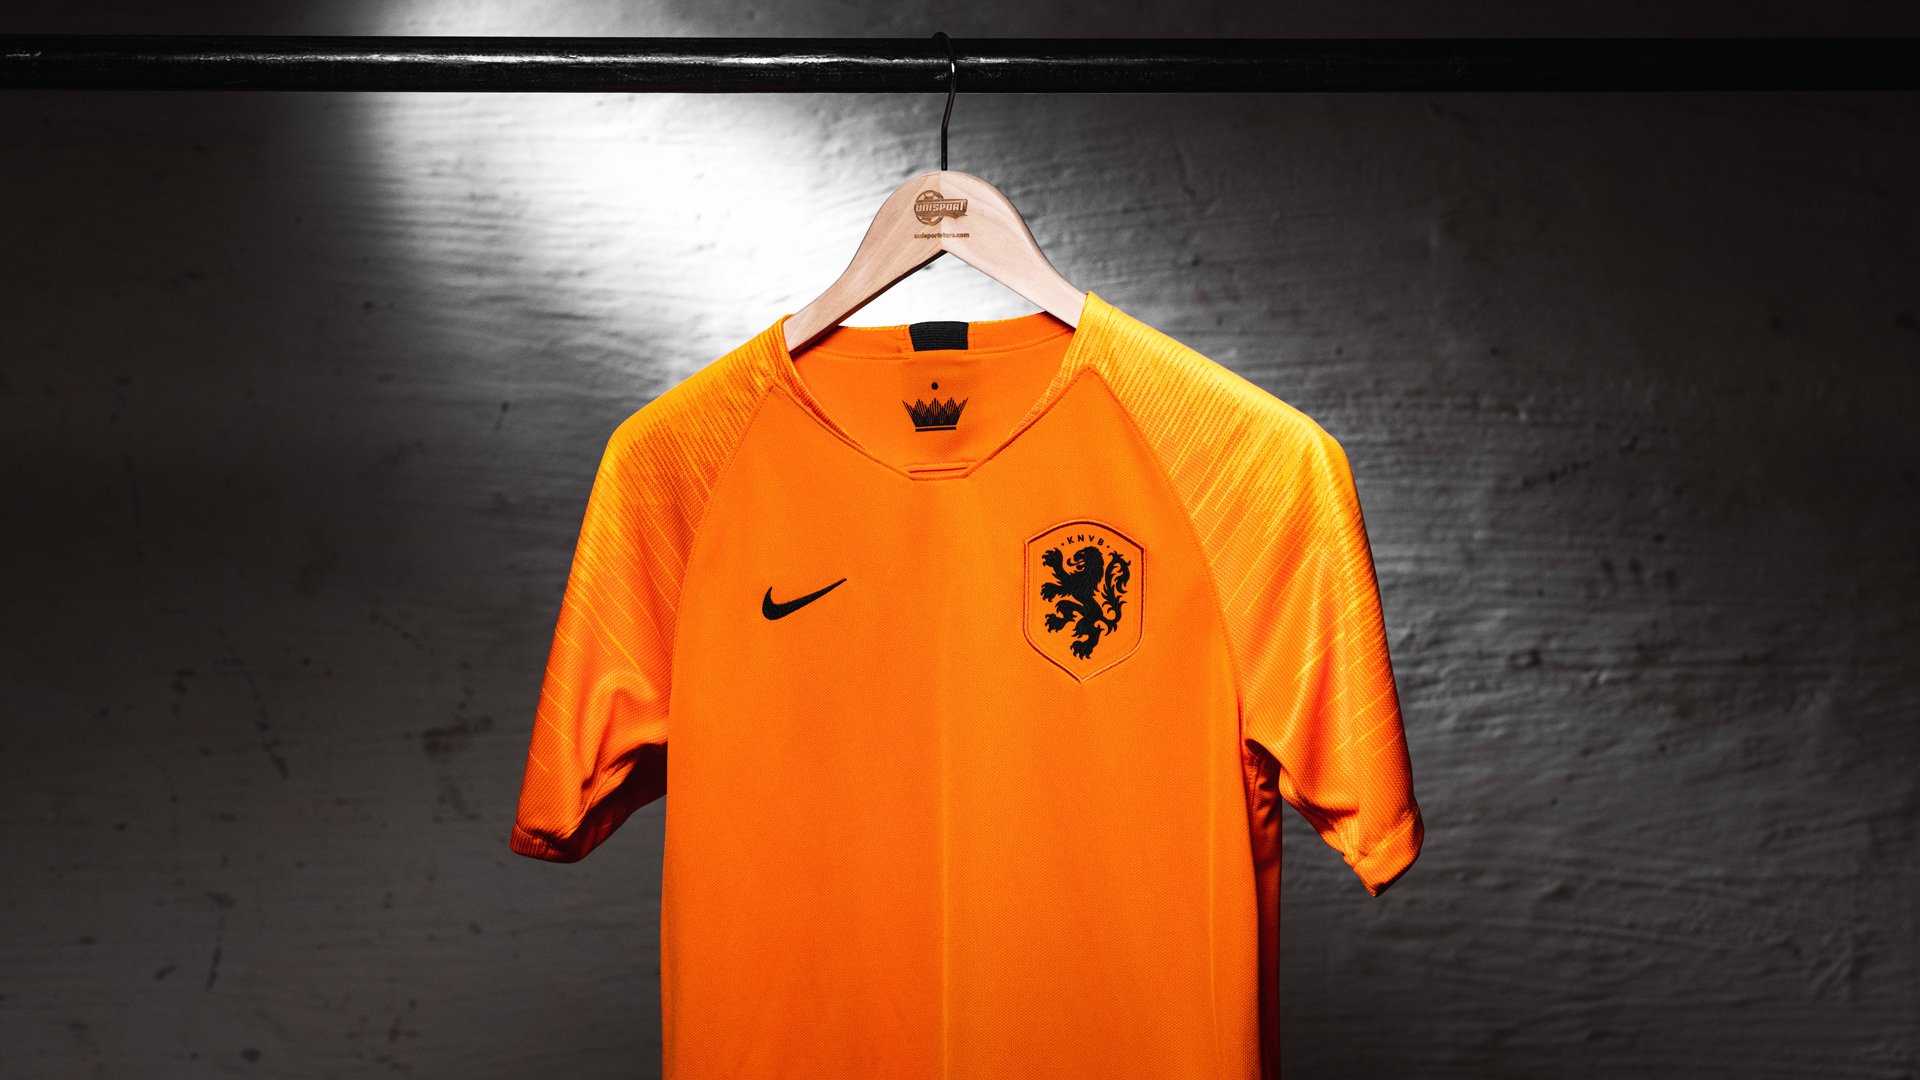 Overjas kwartaal Keizer Het nieuwe Nederlands Elftal shirt is bekend! 